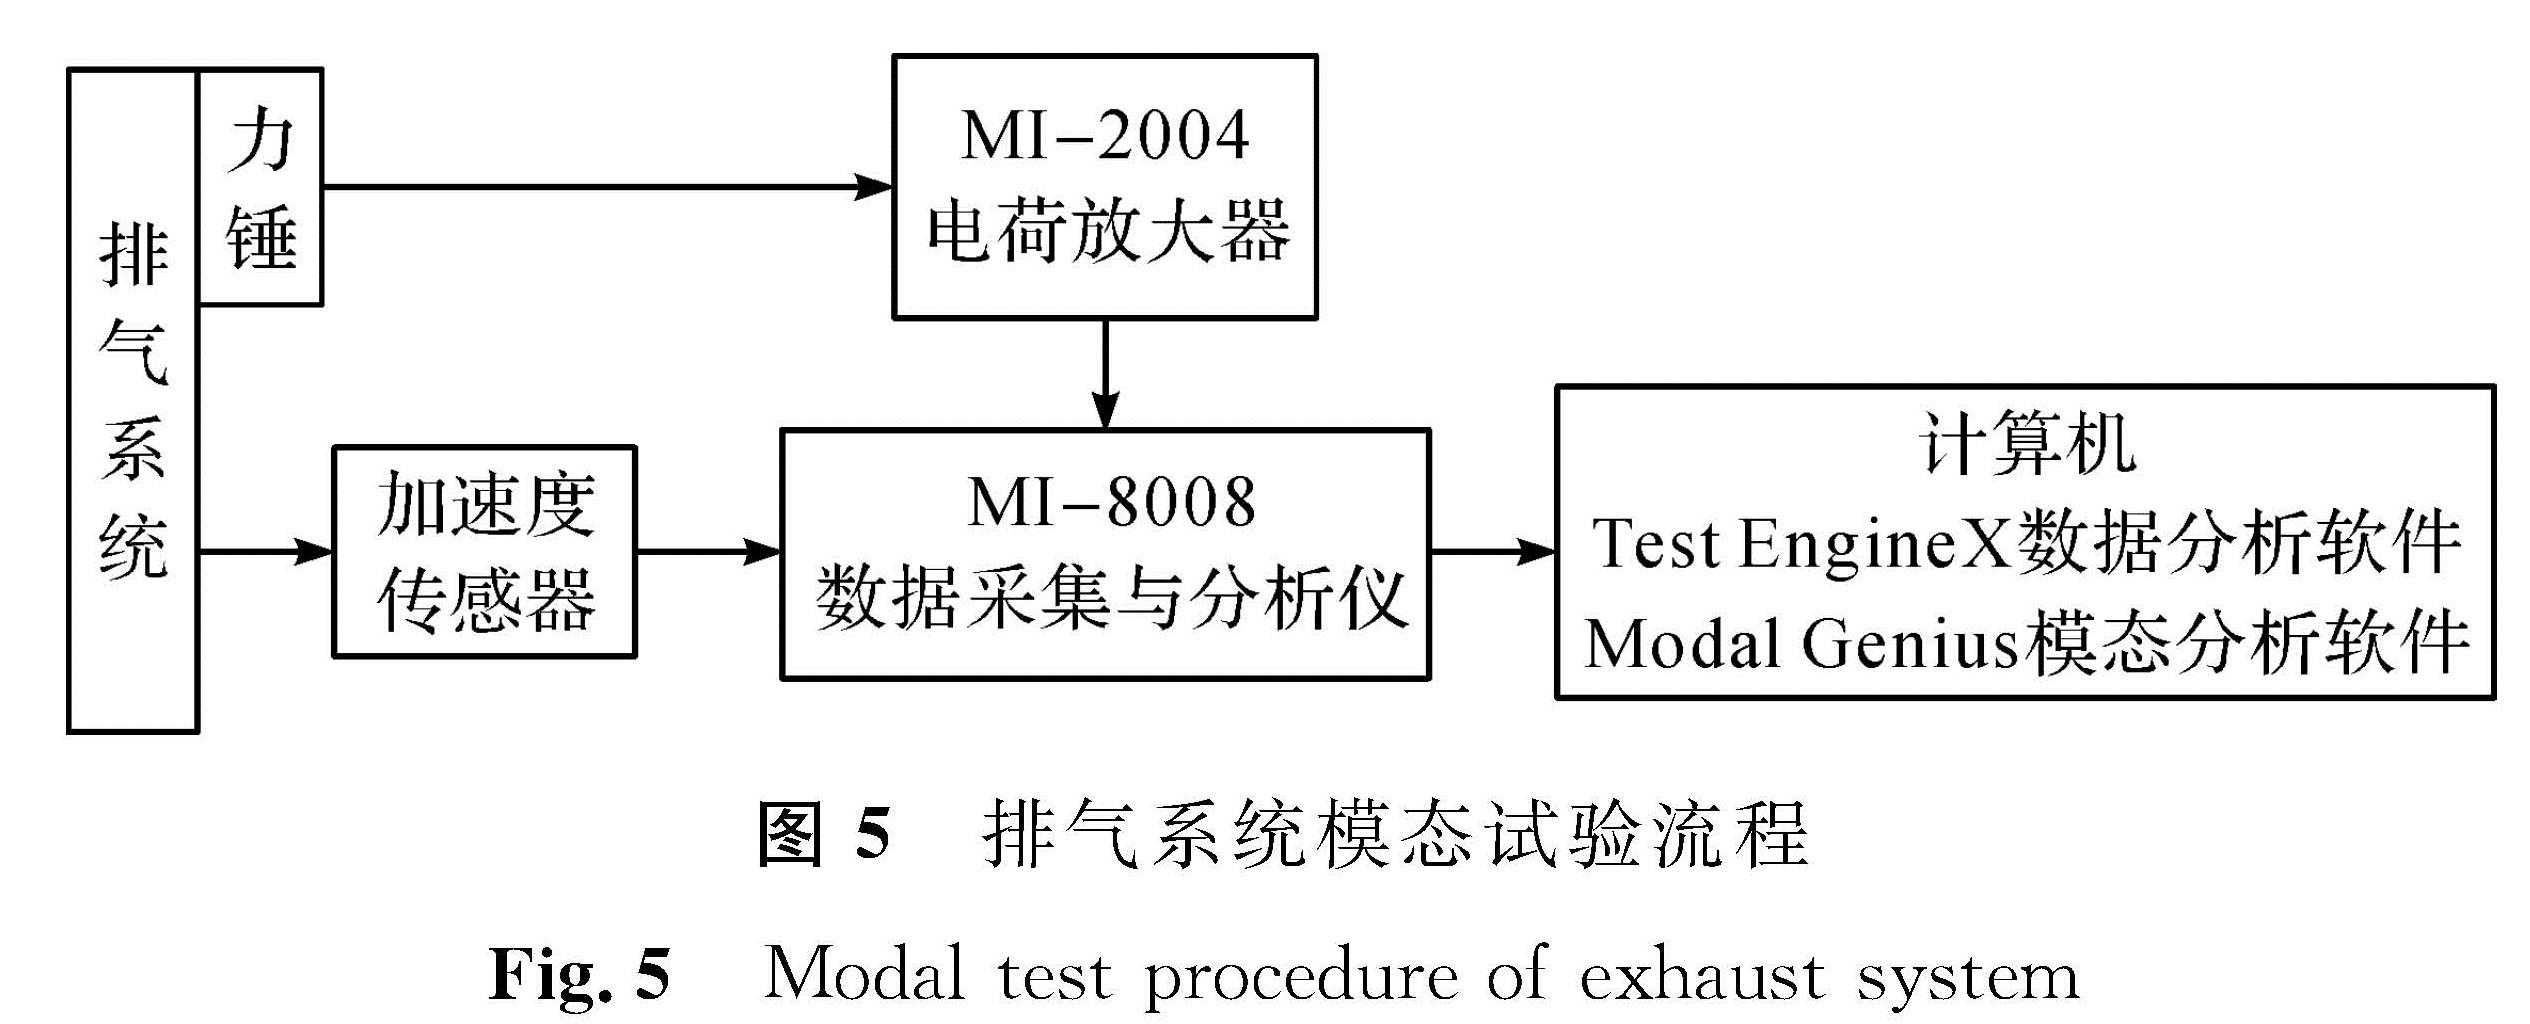 图5 排气系统模态试验流程<br/>Fig.5 Modal test procedure of exhaust system